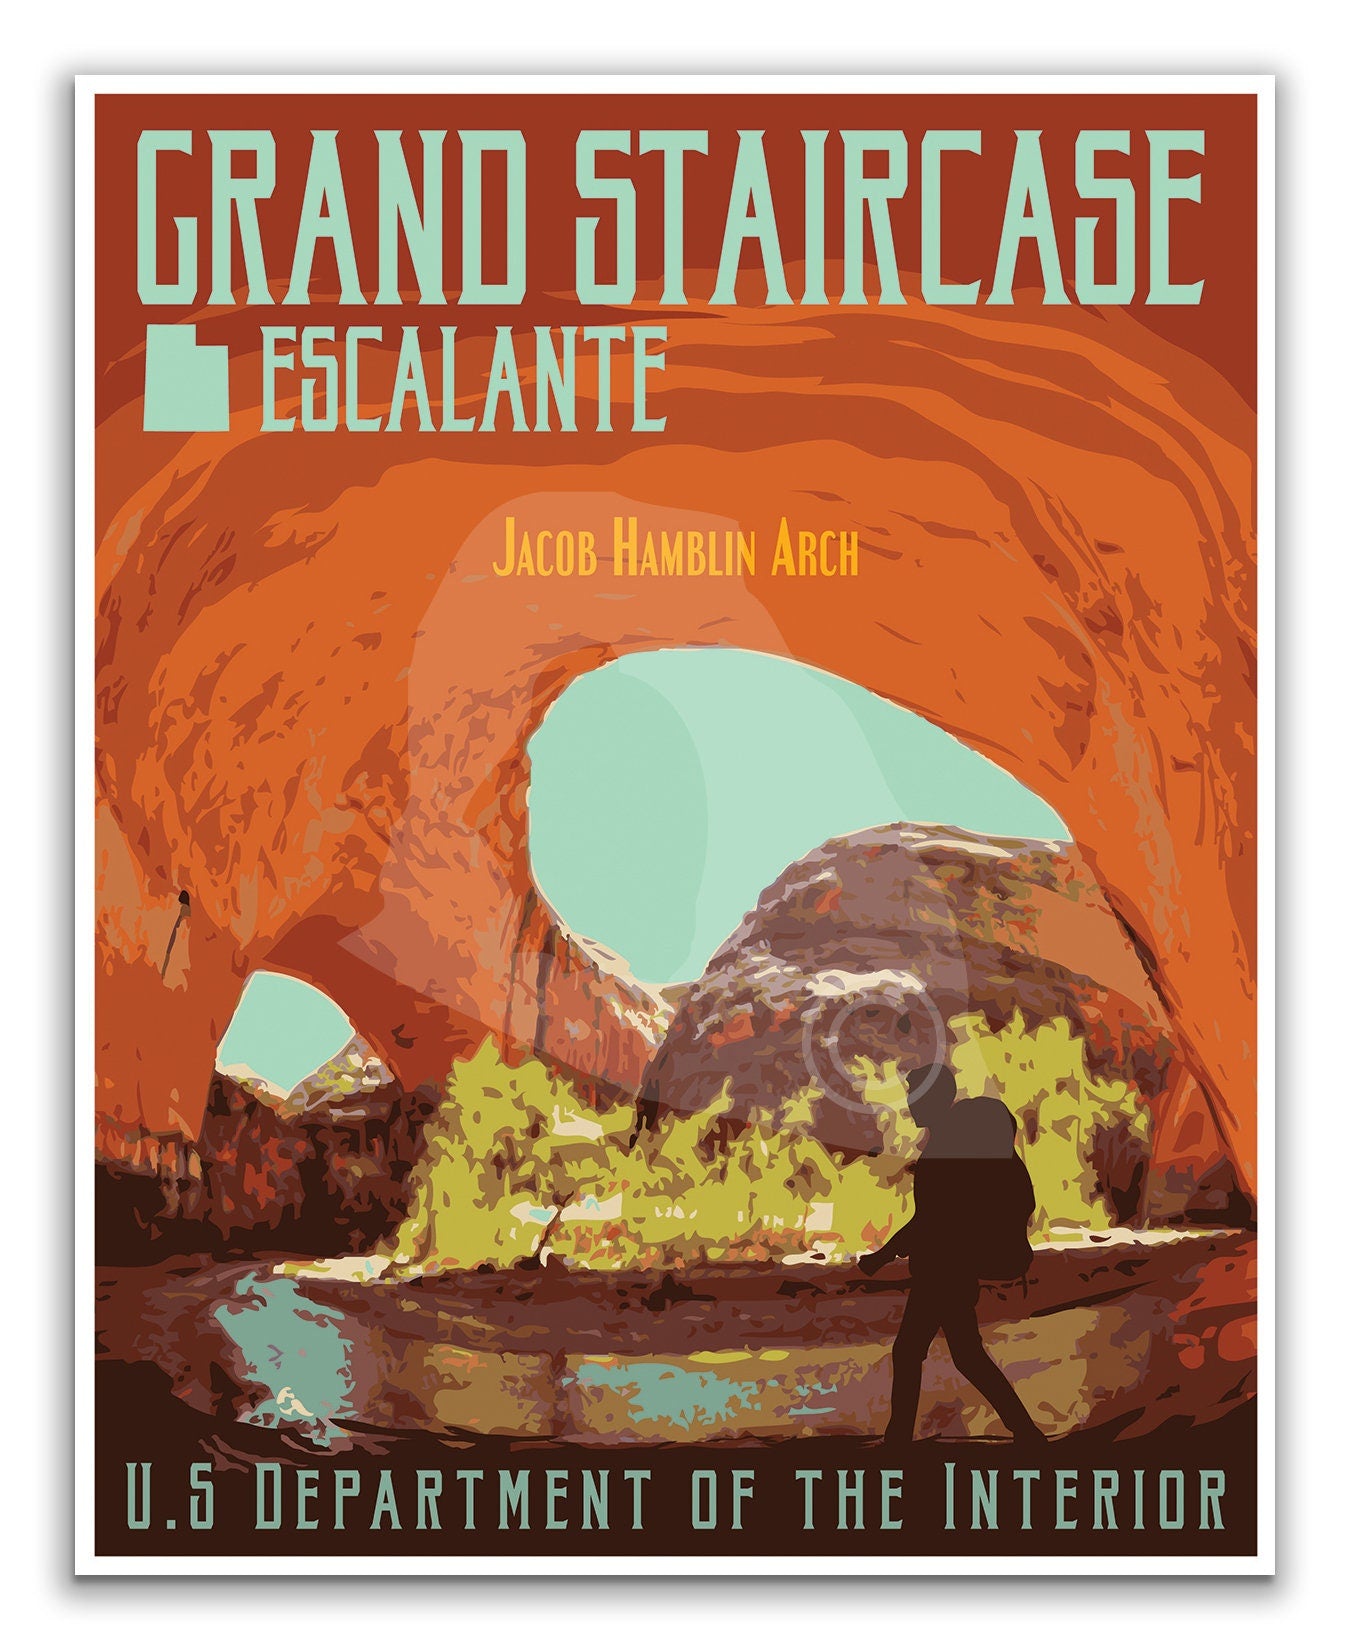 Grand Staircase Escalante Print, Jacob Hamblin Arches Poster, Utah National Monument Print, Vintage Style Travel Art